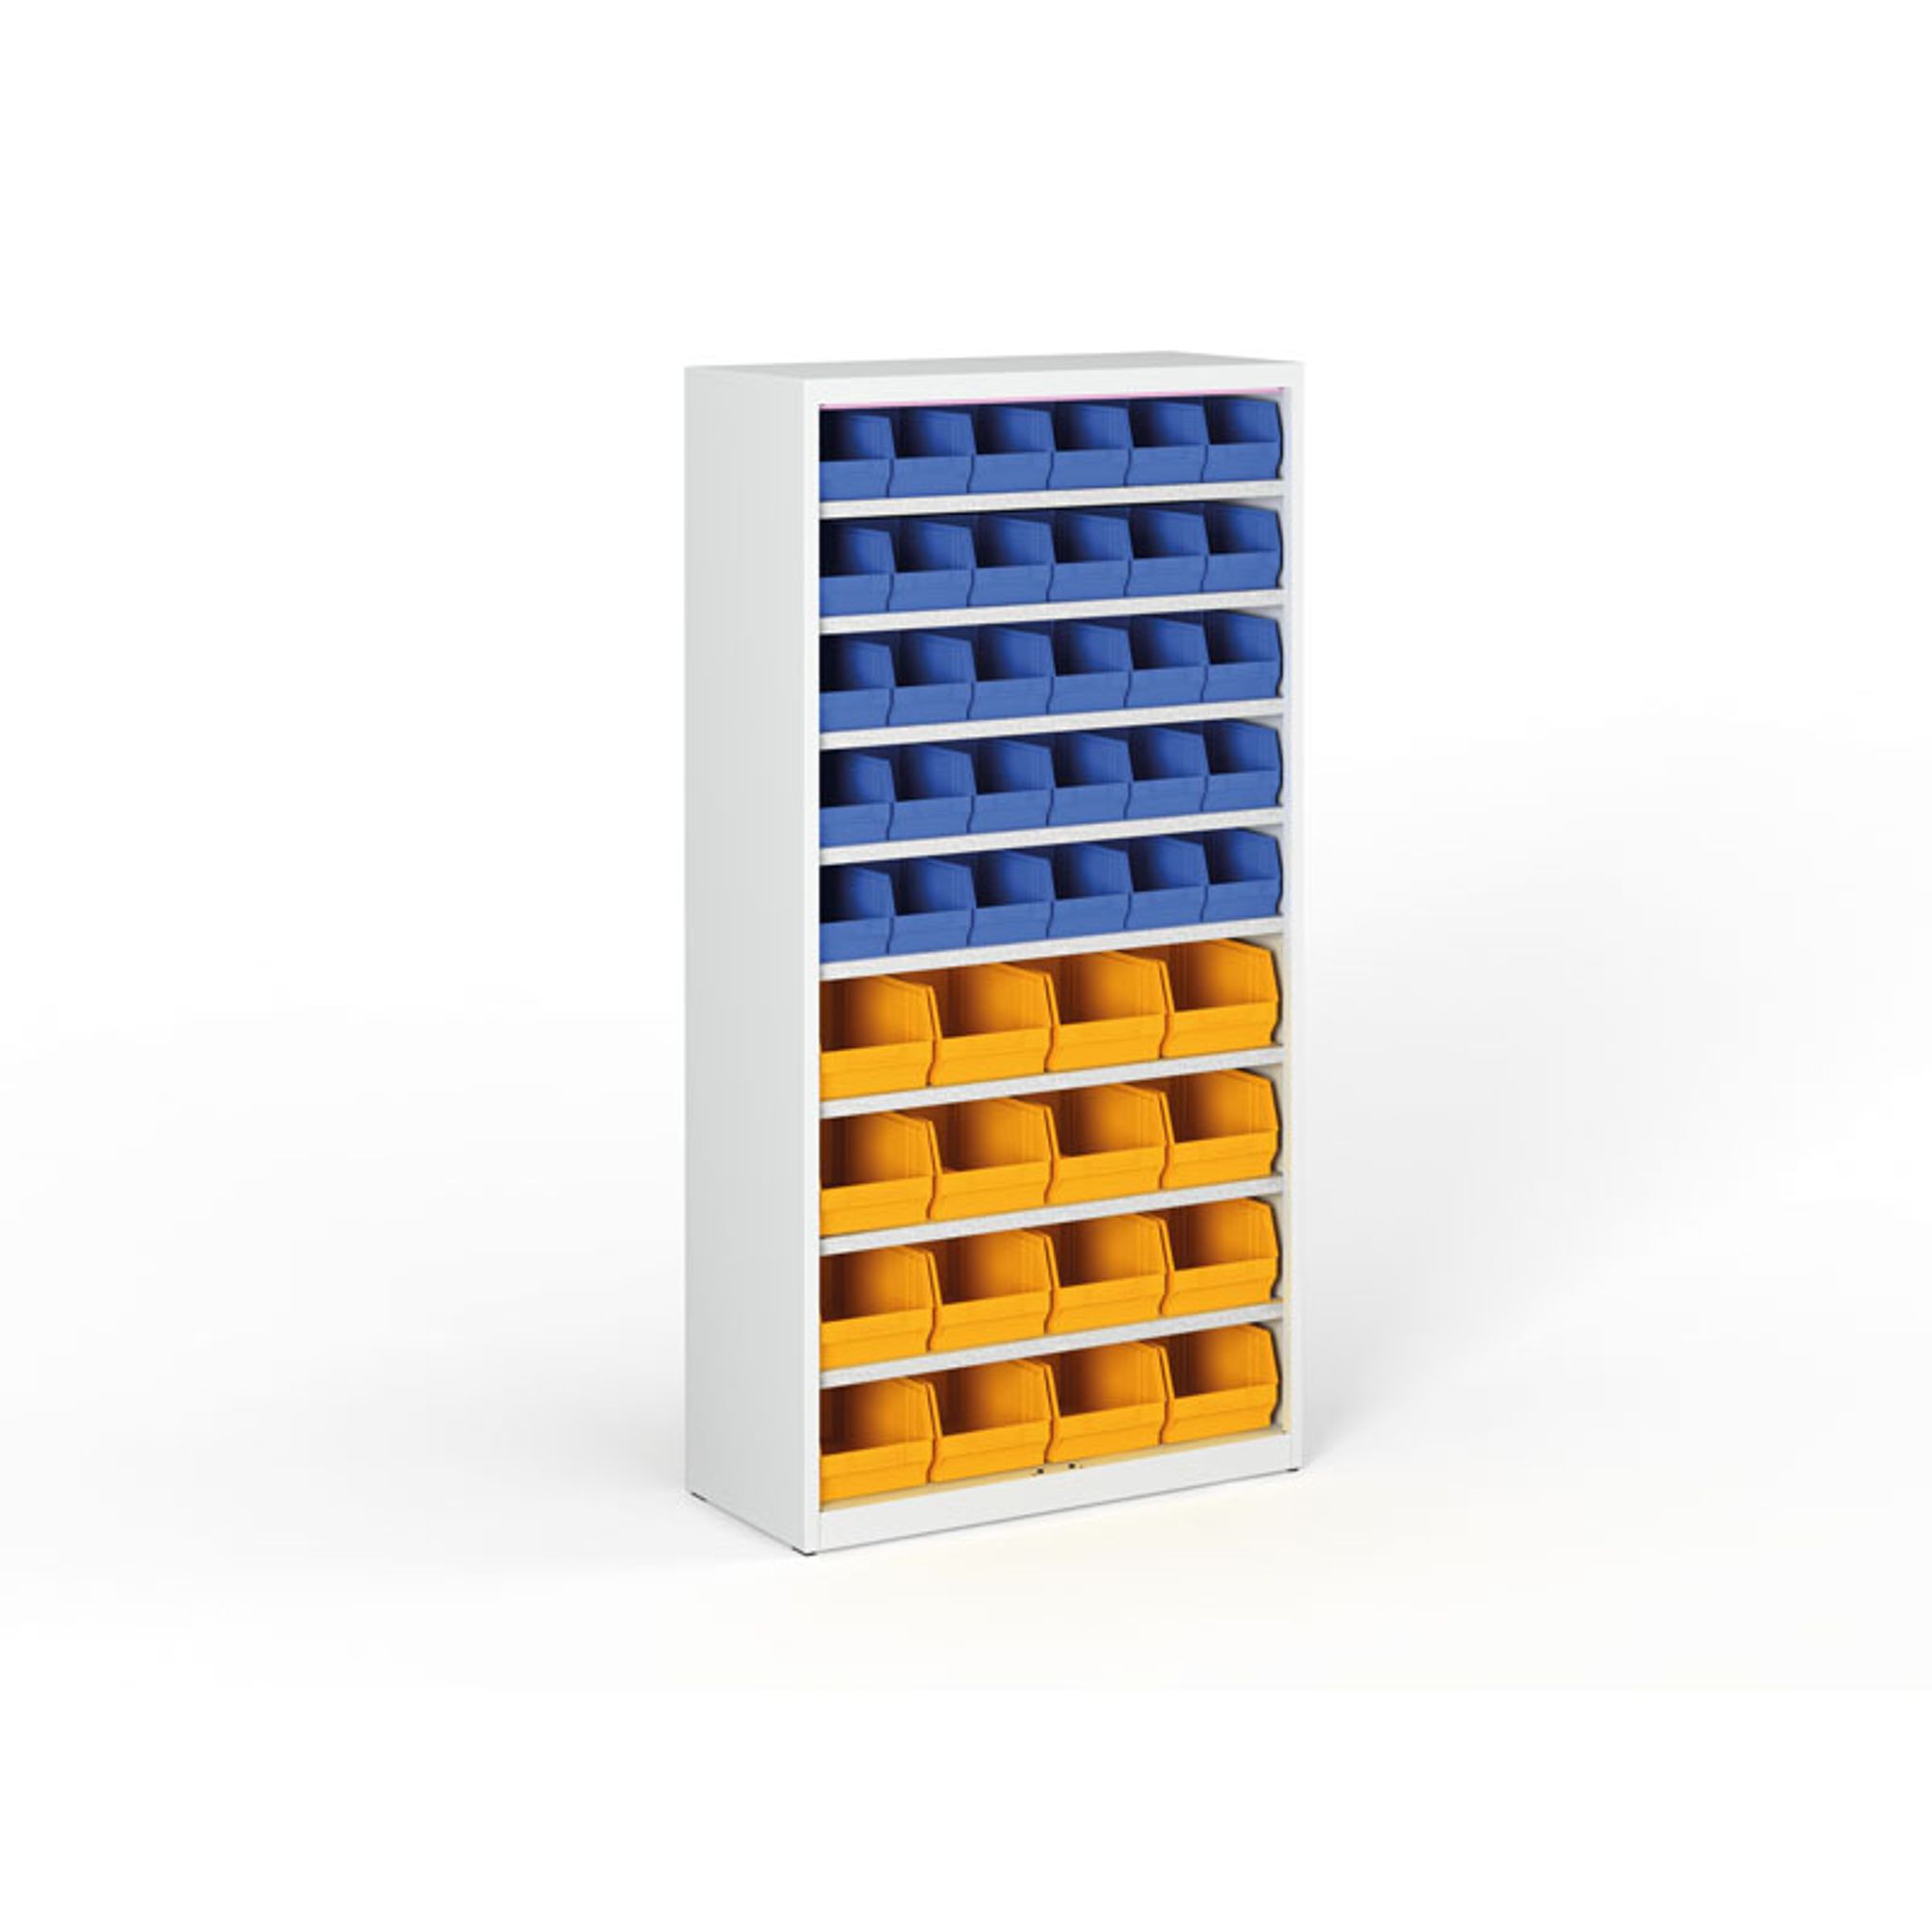 Regál s plastovými boxmi BASIC so zadnou stenou - 1800 x 400 x 920 mm, 30x B, 16x C